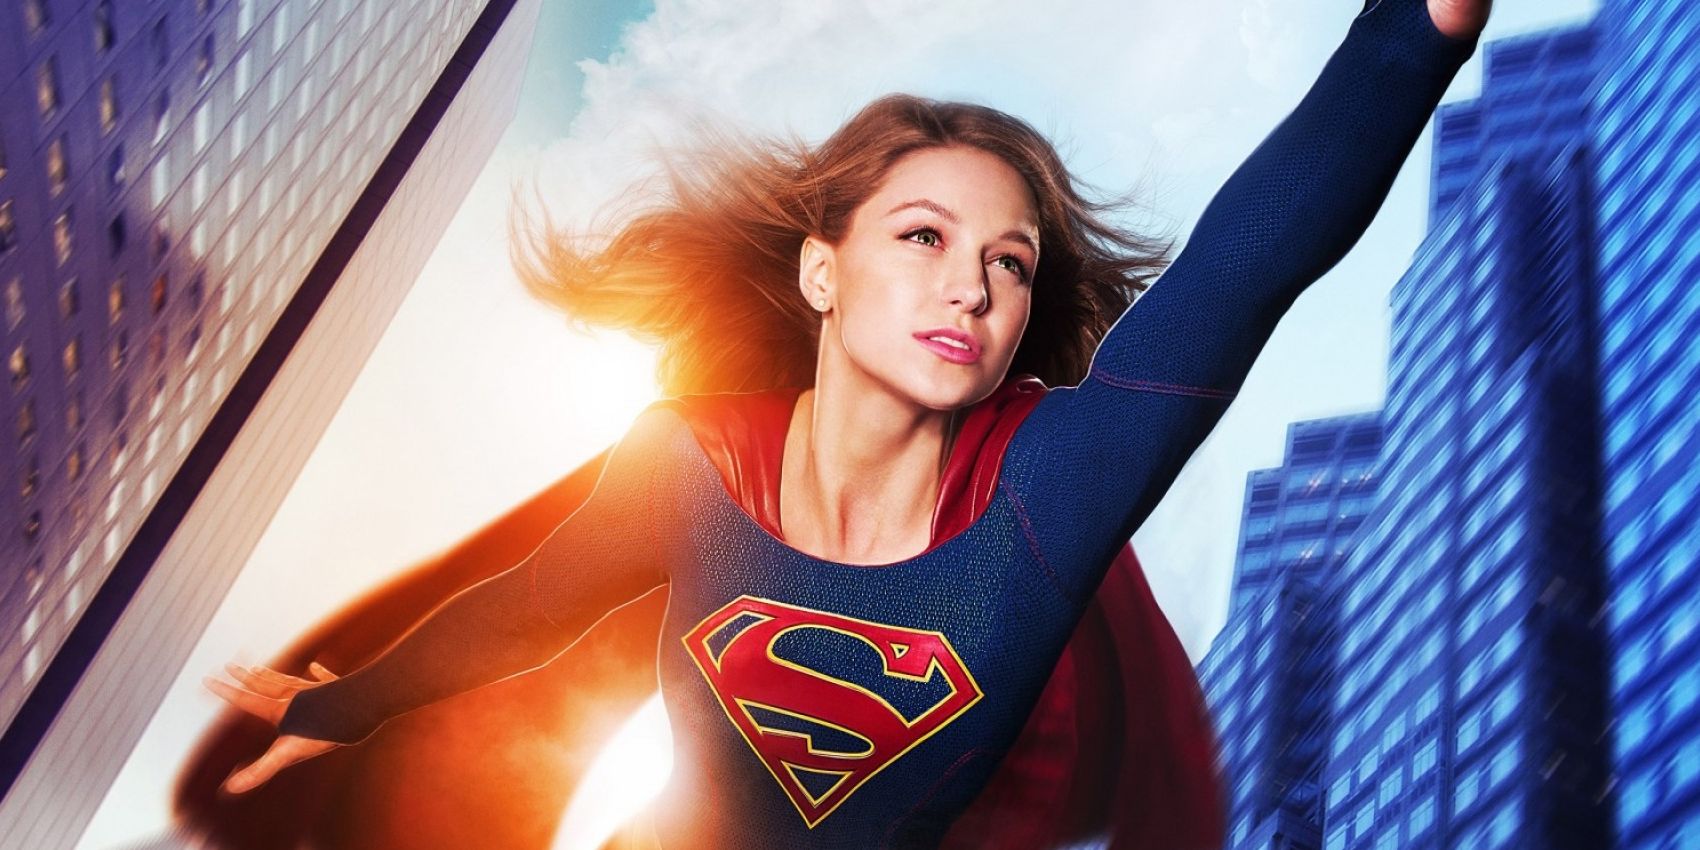 Melissa Benoist As Kara Danvers From The Arrowverse Wearing Her Supergirl Costume And Flying